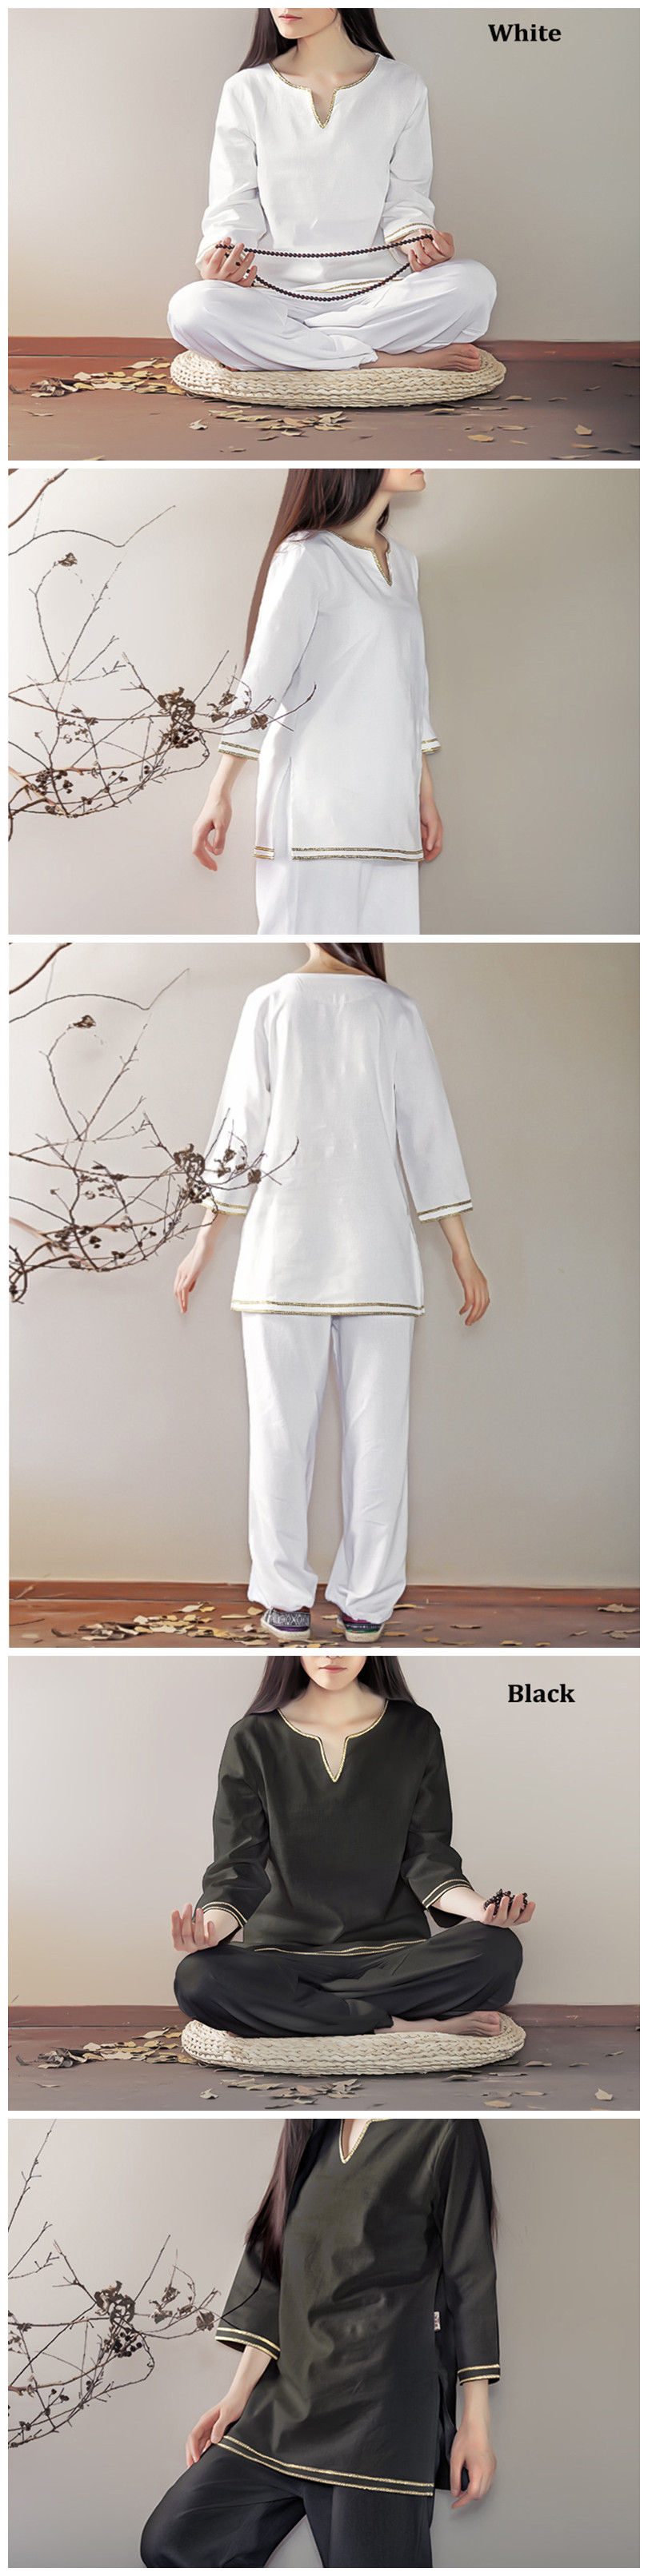 Women-Yoga-Suit-Cotton-Linen-Meditation-Clothing-Set-Lady-Dance-Fitness-Clothes-Sportswear-1078849-2